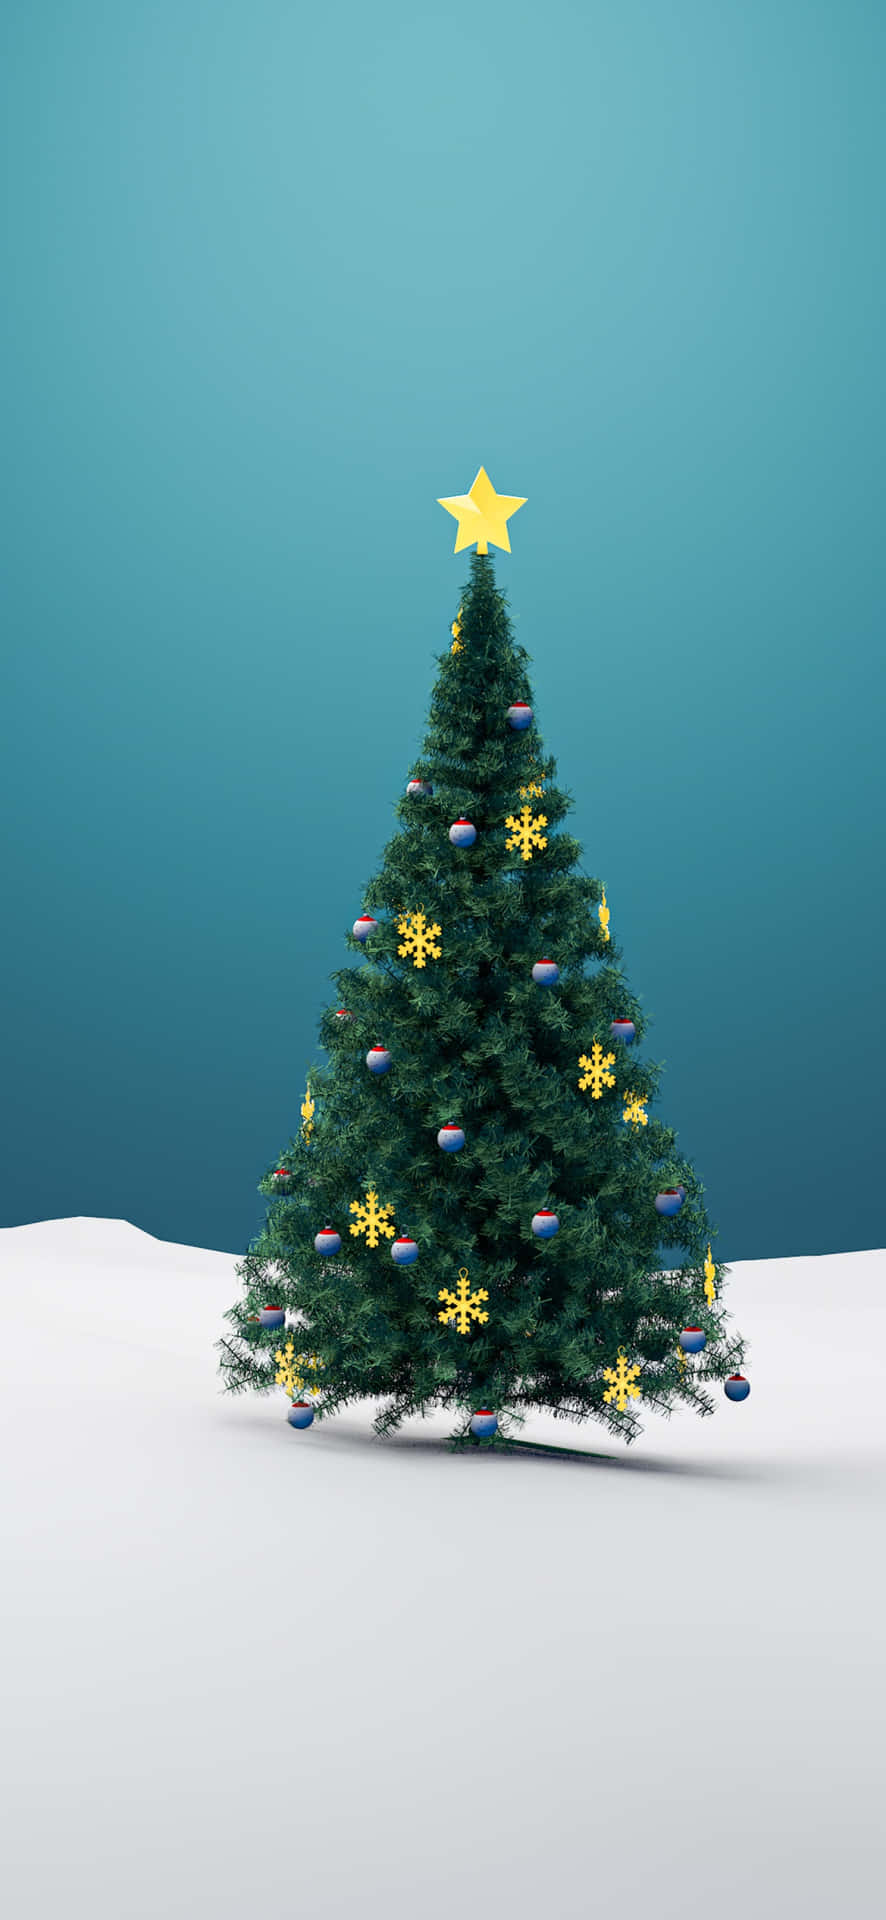 Cute Christmas Tree On Snow Wallpaper